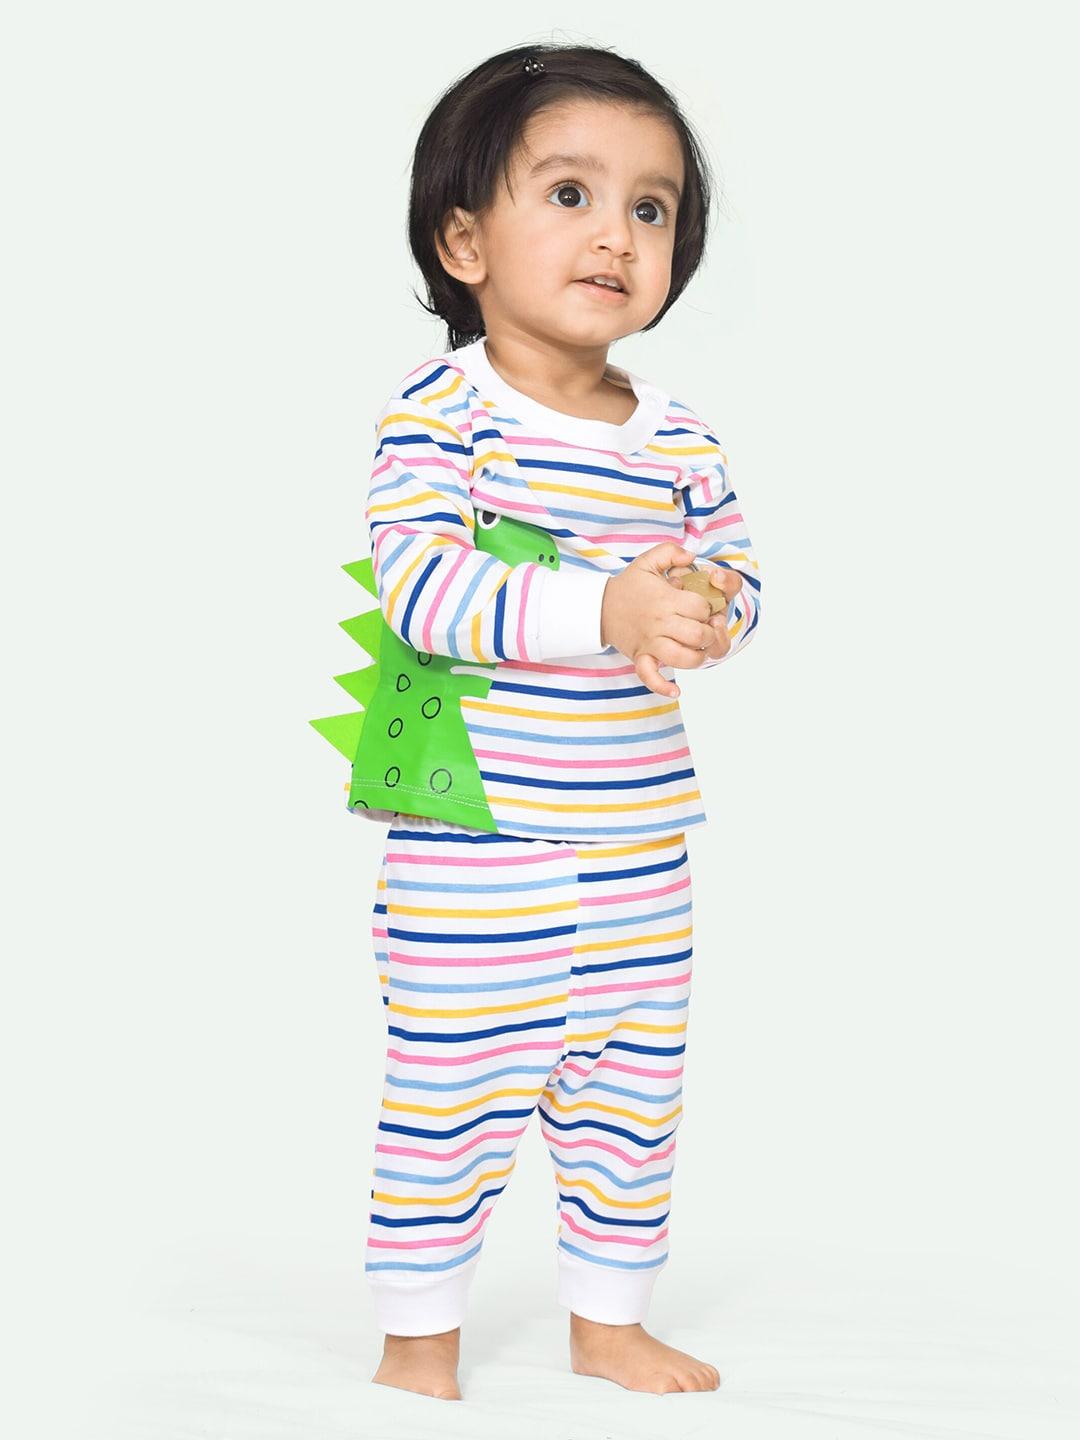 ariel Infants Striped Cotton T-shirt with Pyjamas Clothing Set